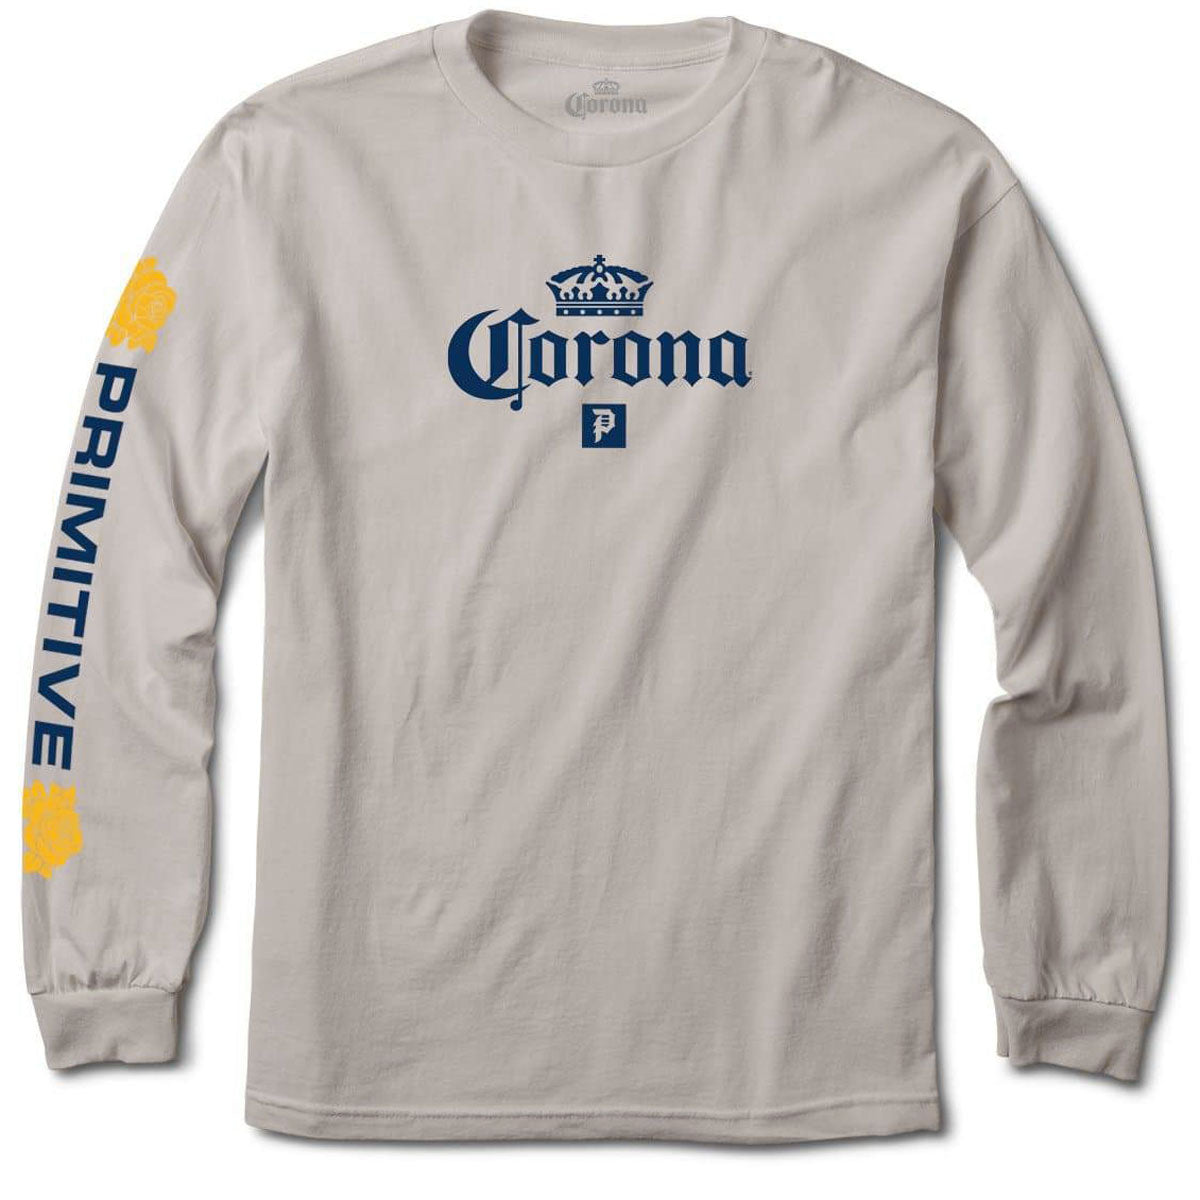 Primitive x Corona Cerveza Long Sleeve T-Shirt - Sand image 1